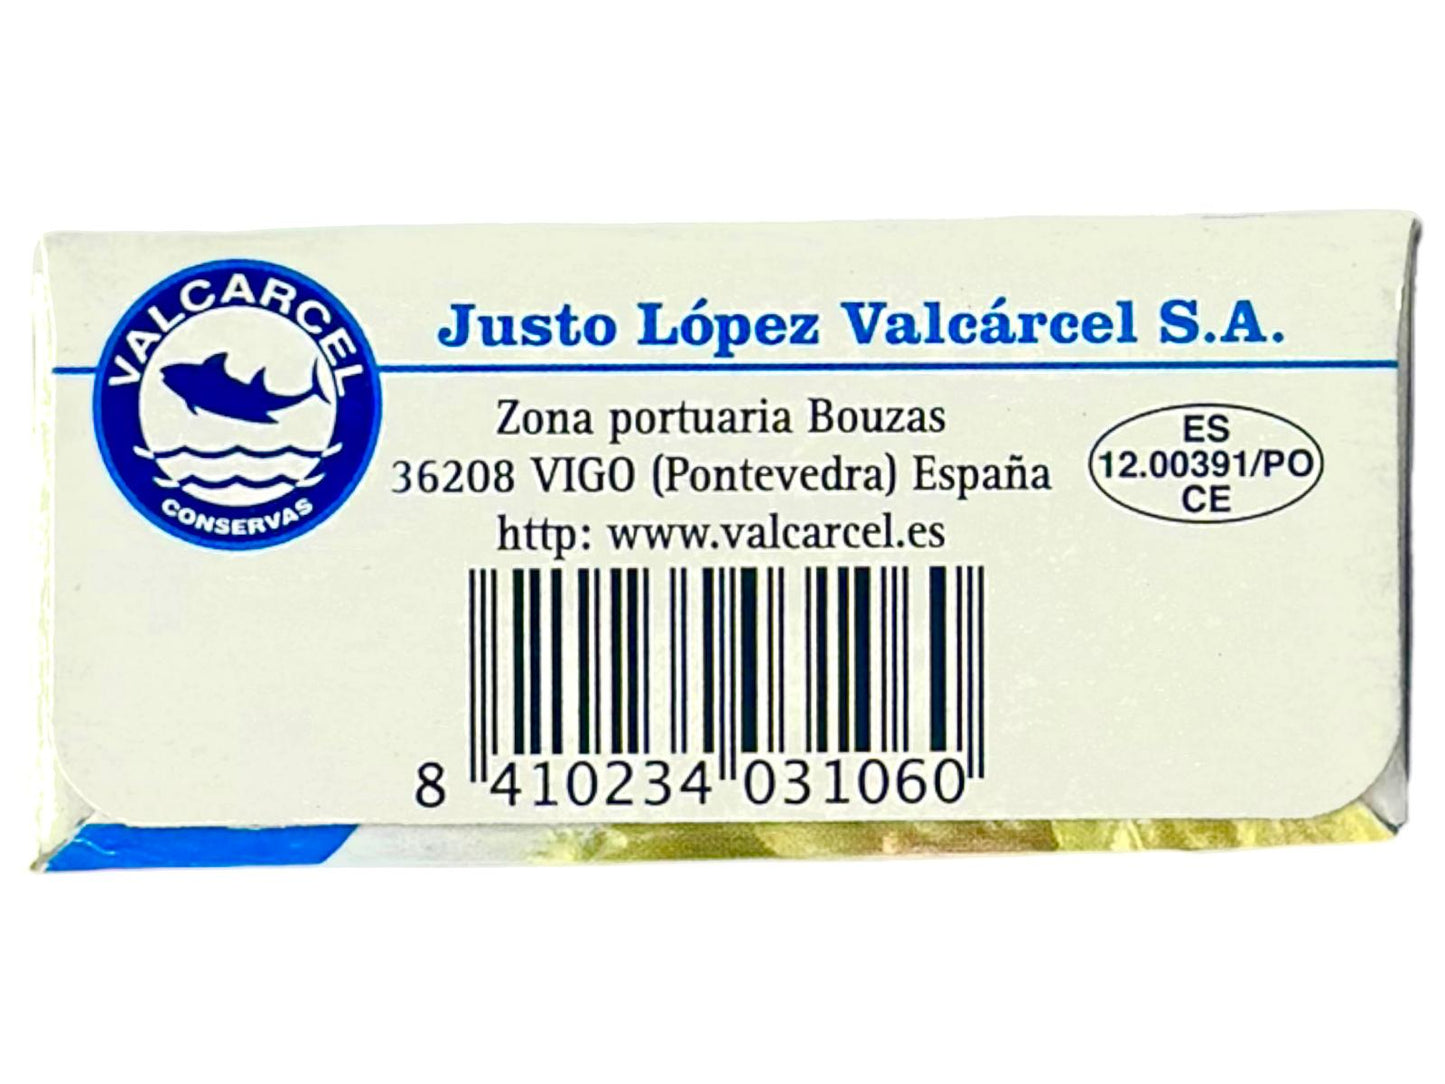 Vigilante Ventresca de Atun Claro en Aceite de Oliva Spain - Light Tuna Belly in Olive Oil 115g - 4 Pack Total 640g Best Before Jan 2027